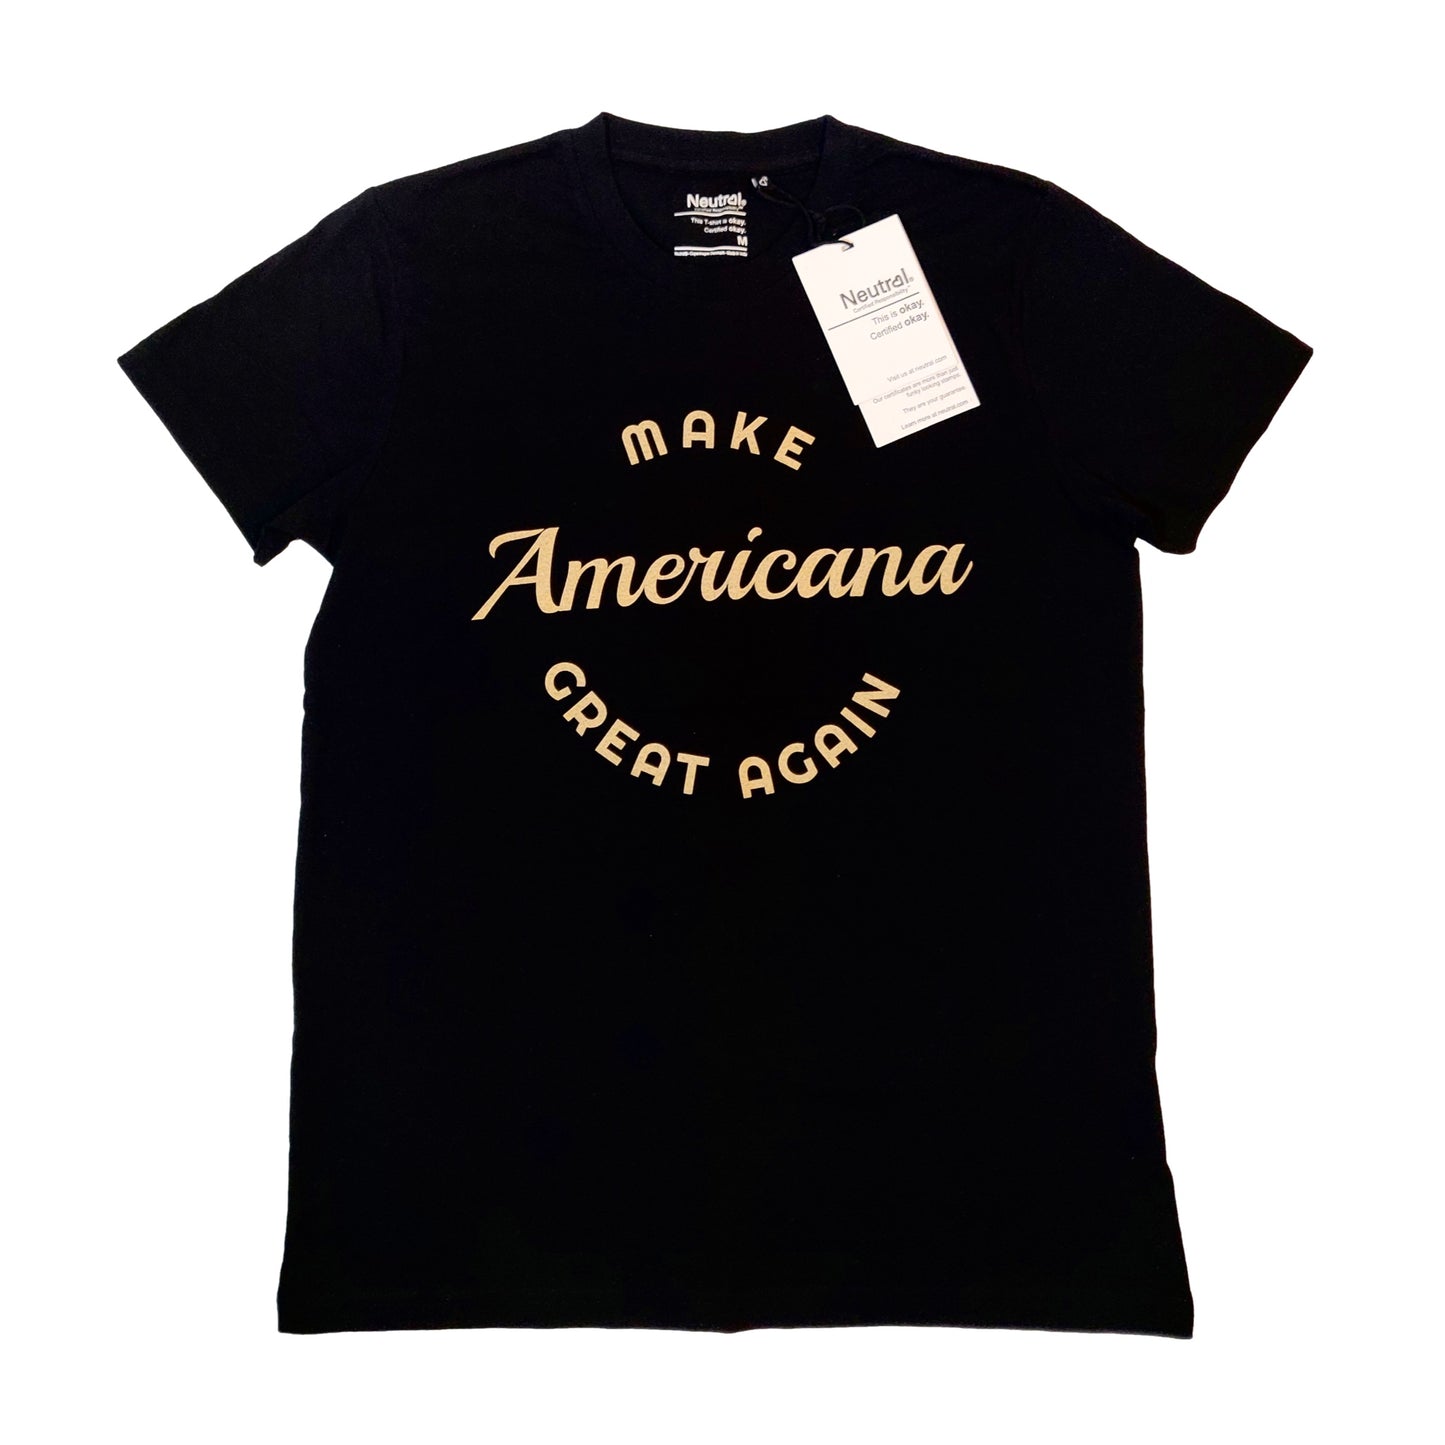 Make Americana Great Again shirt